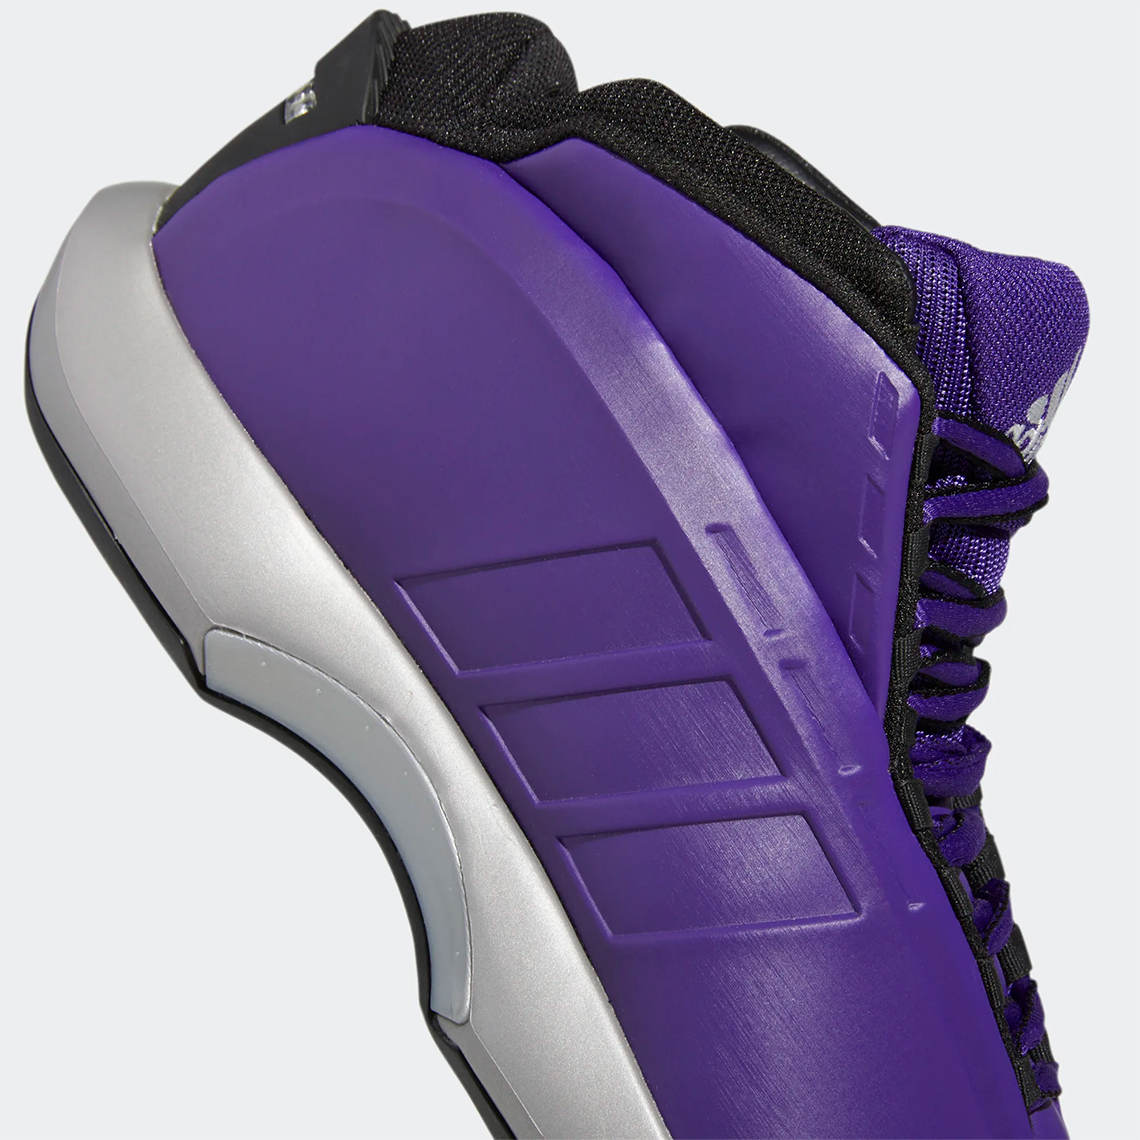 Adidas Crazy 1 Kobe Regal Purple Core Black Pewter Gy8944 9